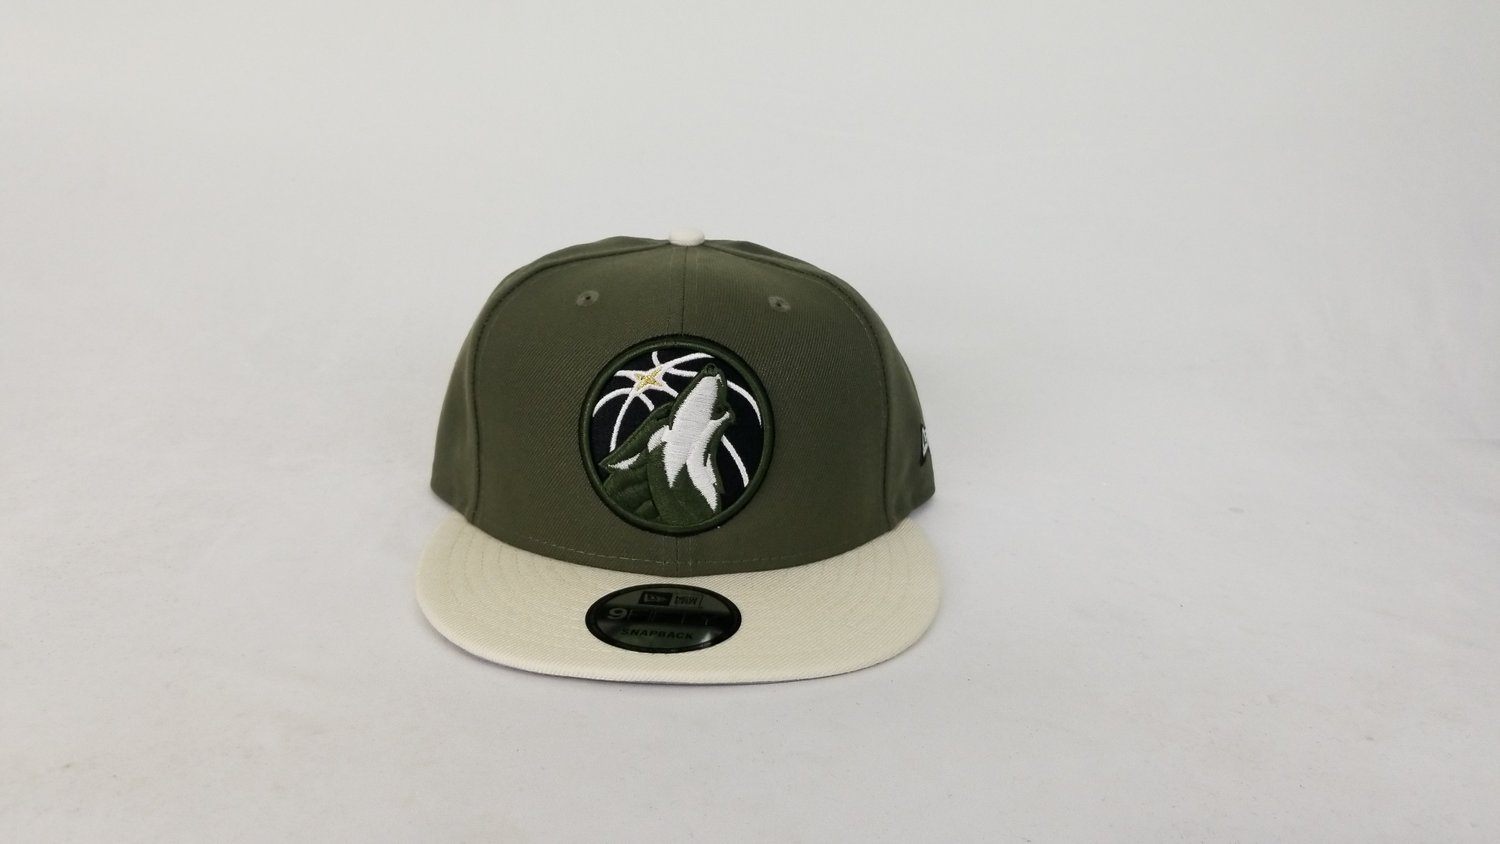 Matching New Era 9Fifty Olive Green Minnesota Timberwolves Snapback Hat for Jordan 12 Chris Paul